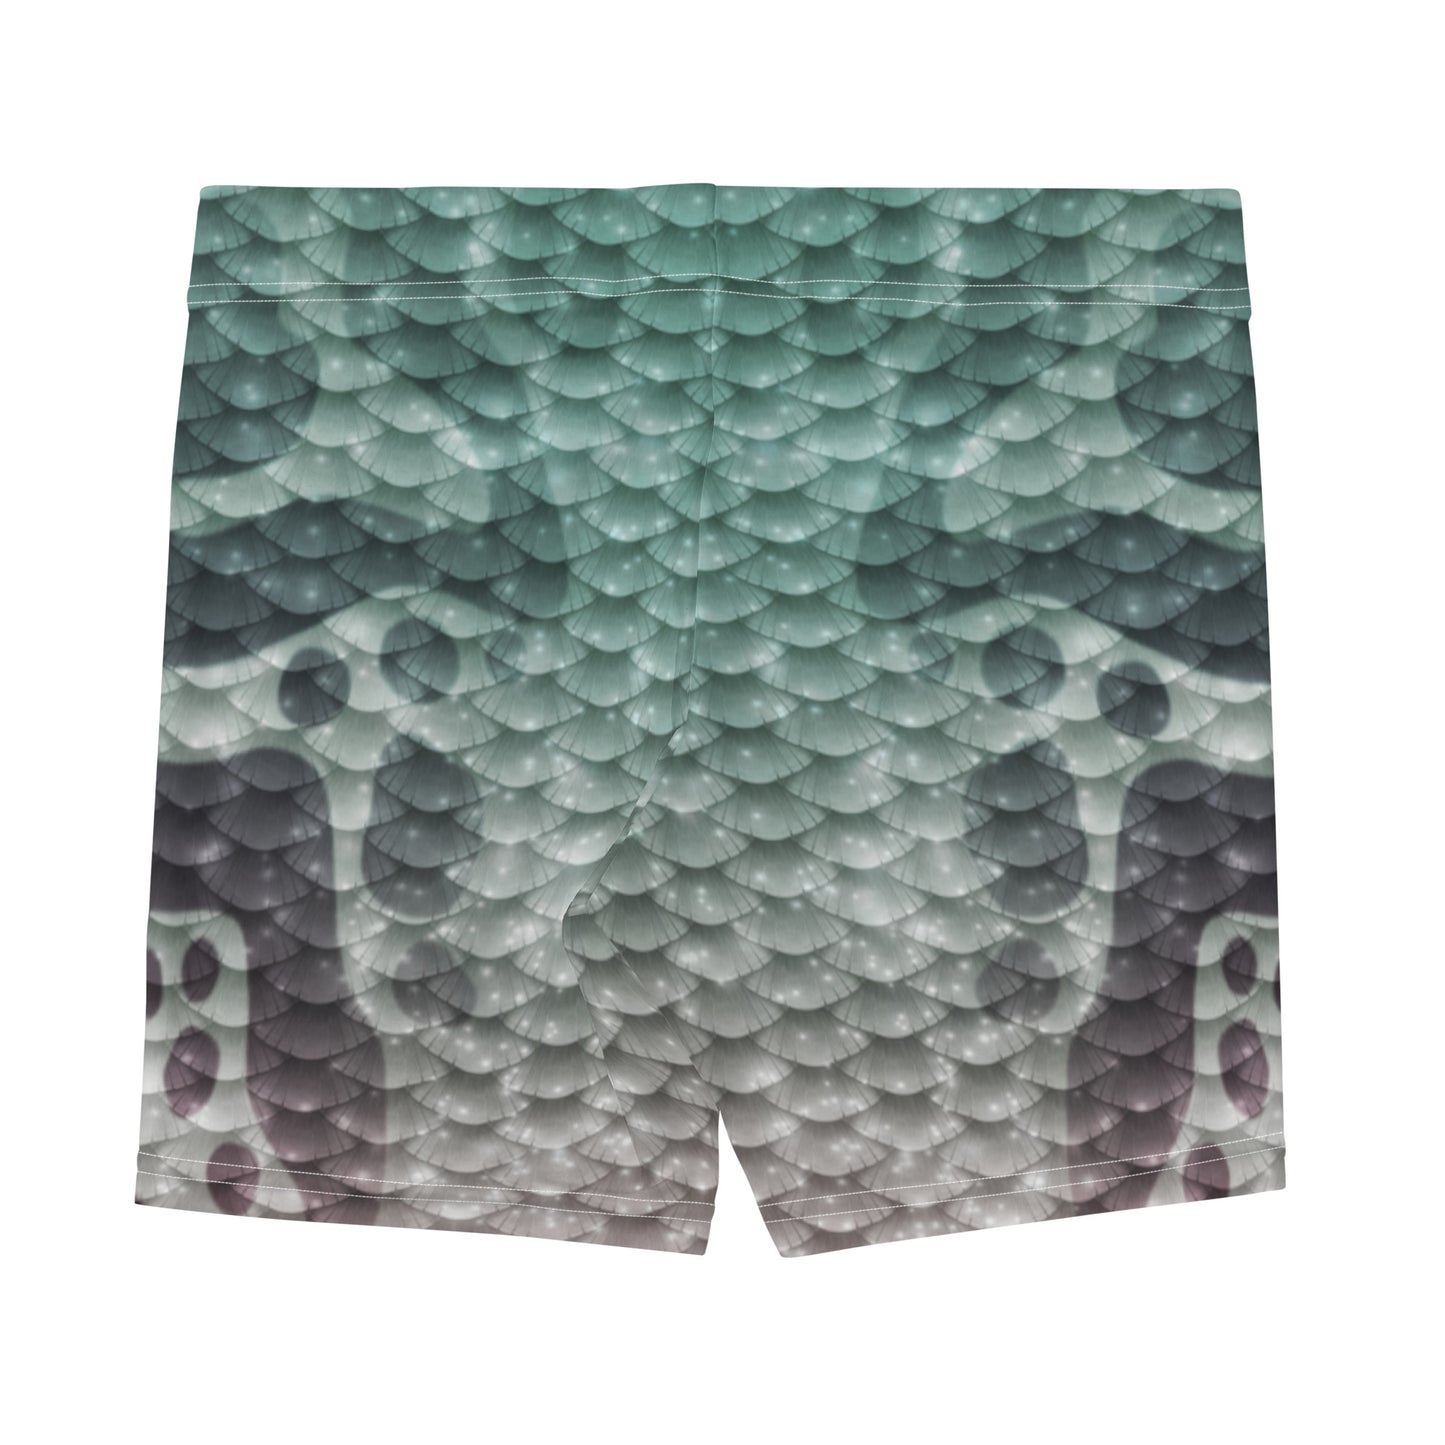 Ocean Mystery Merfolk Shorts